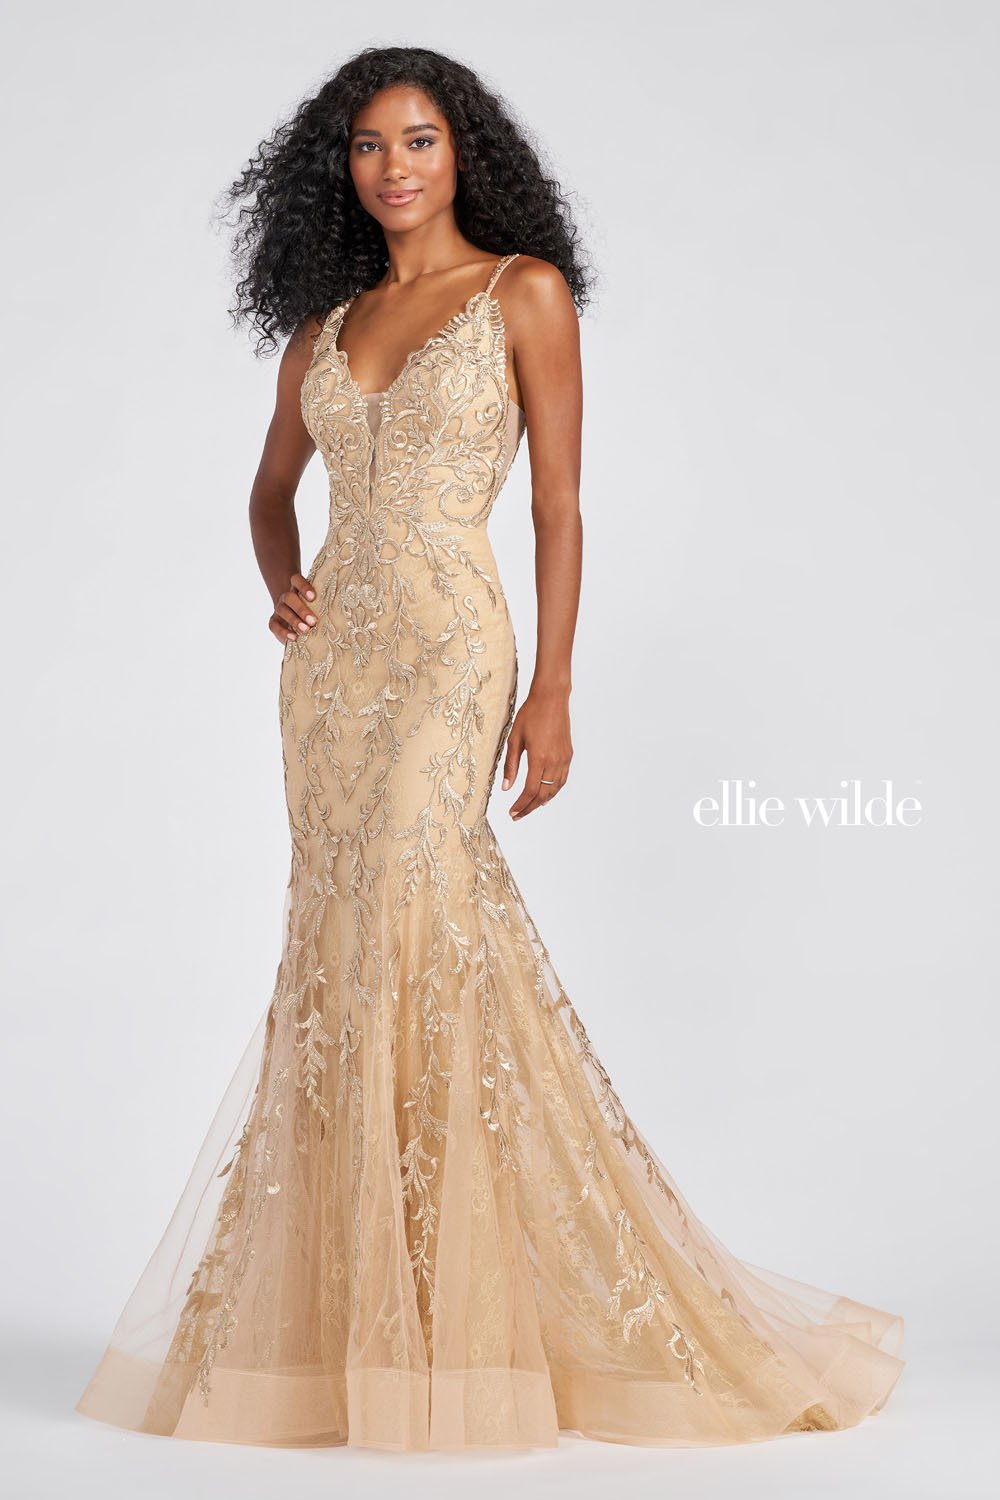 Ellie Wilde Gold EW122101 Prom Dress Image.  Gold formal dress.